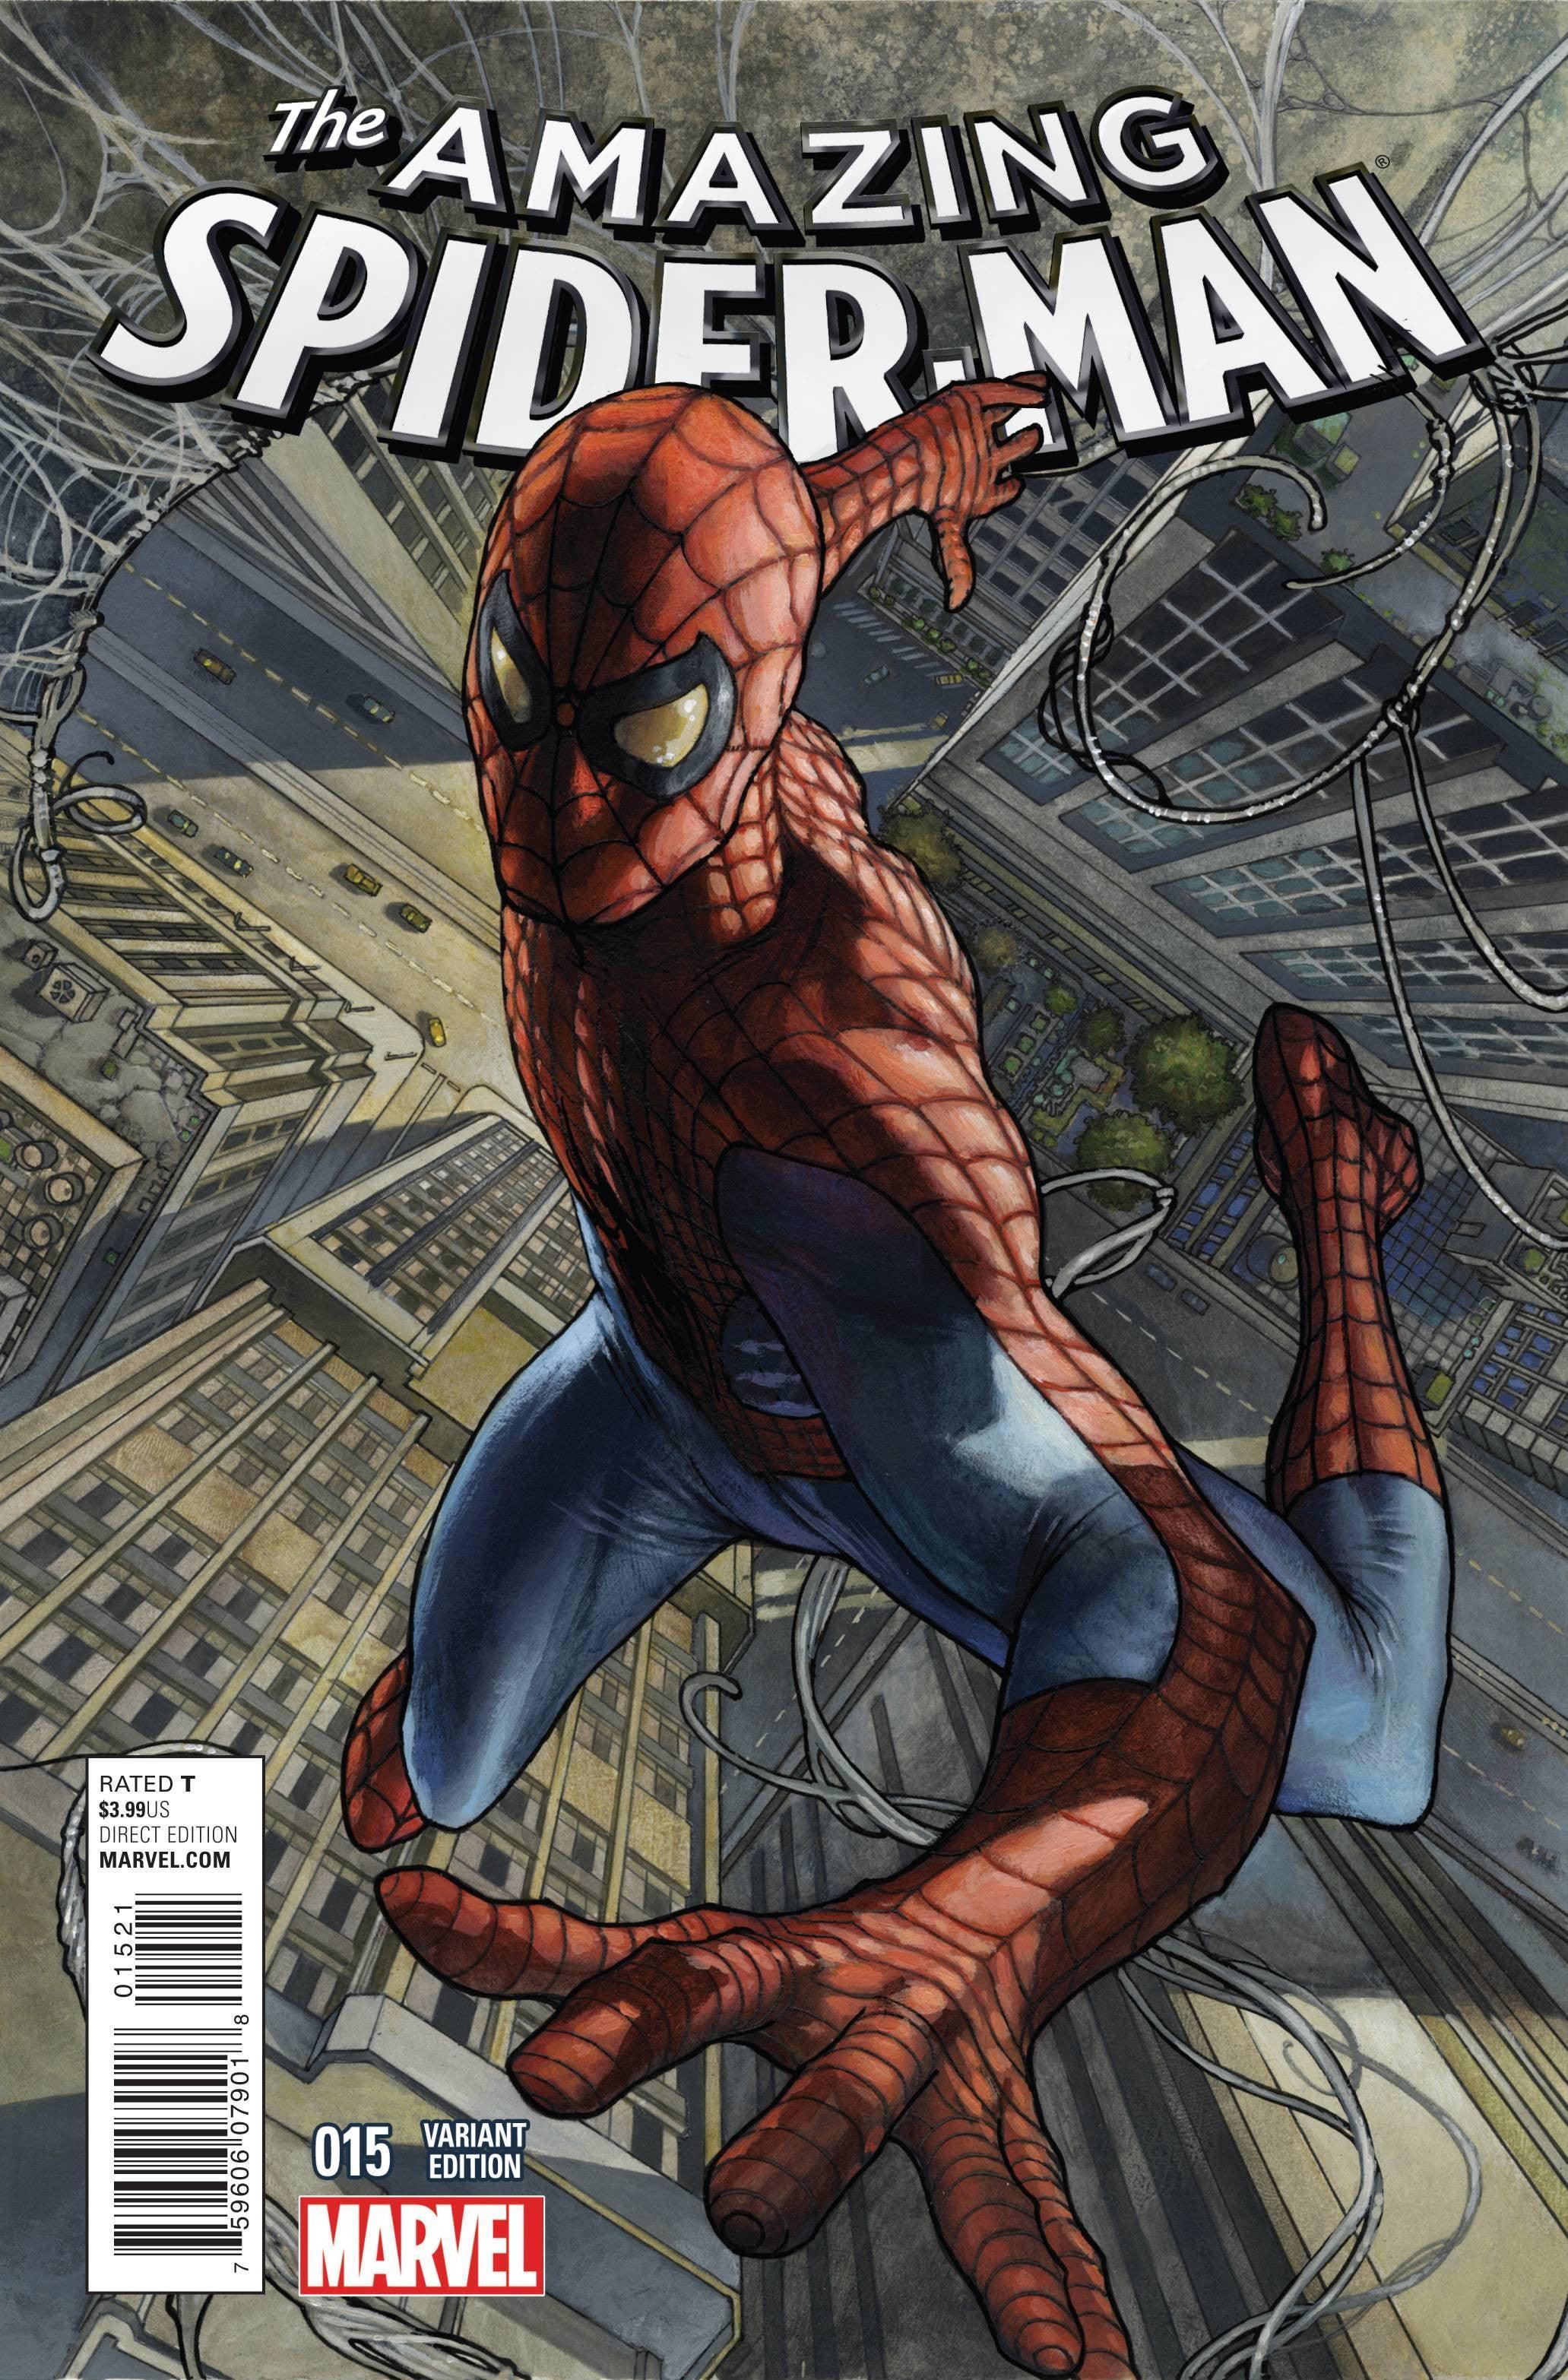 AMAZING SPIDER-MAN VOL 3 (2014) #15 25 COPY INC BIANCHI VAR SV - Kings Comics